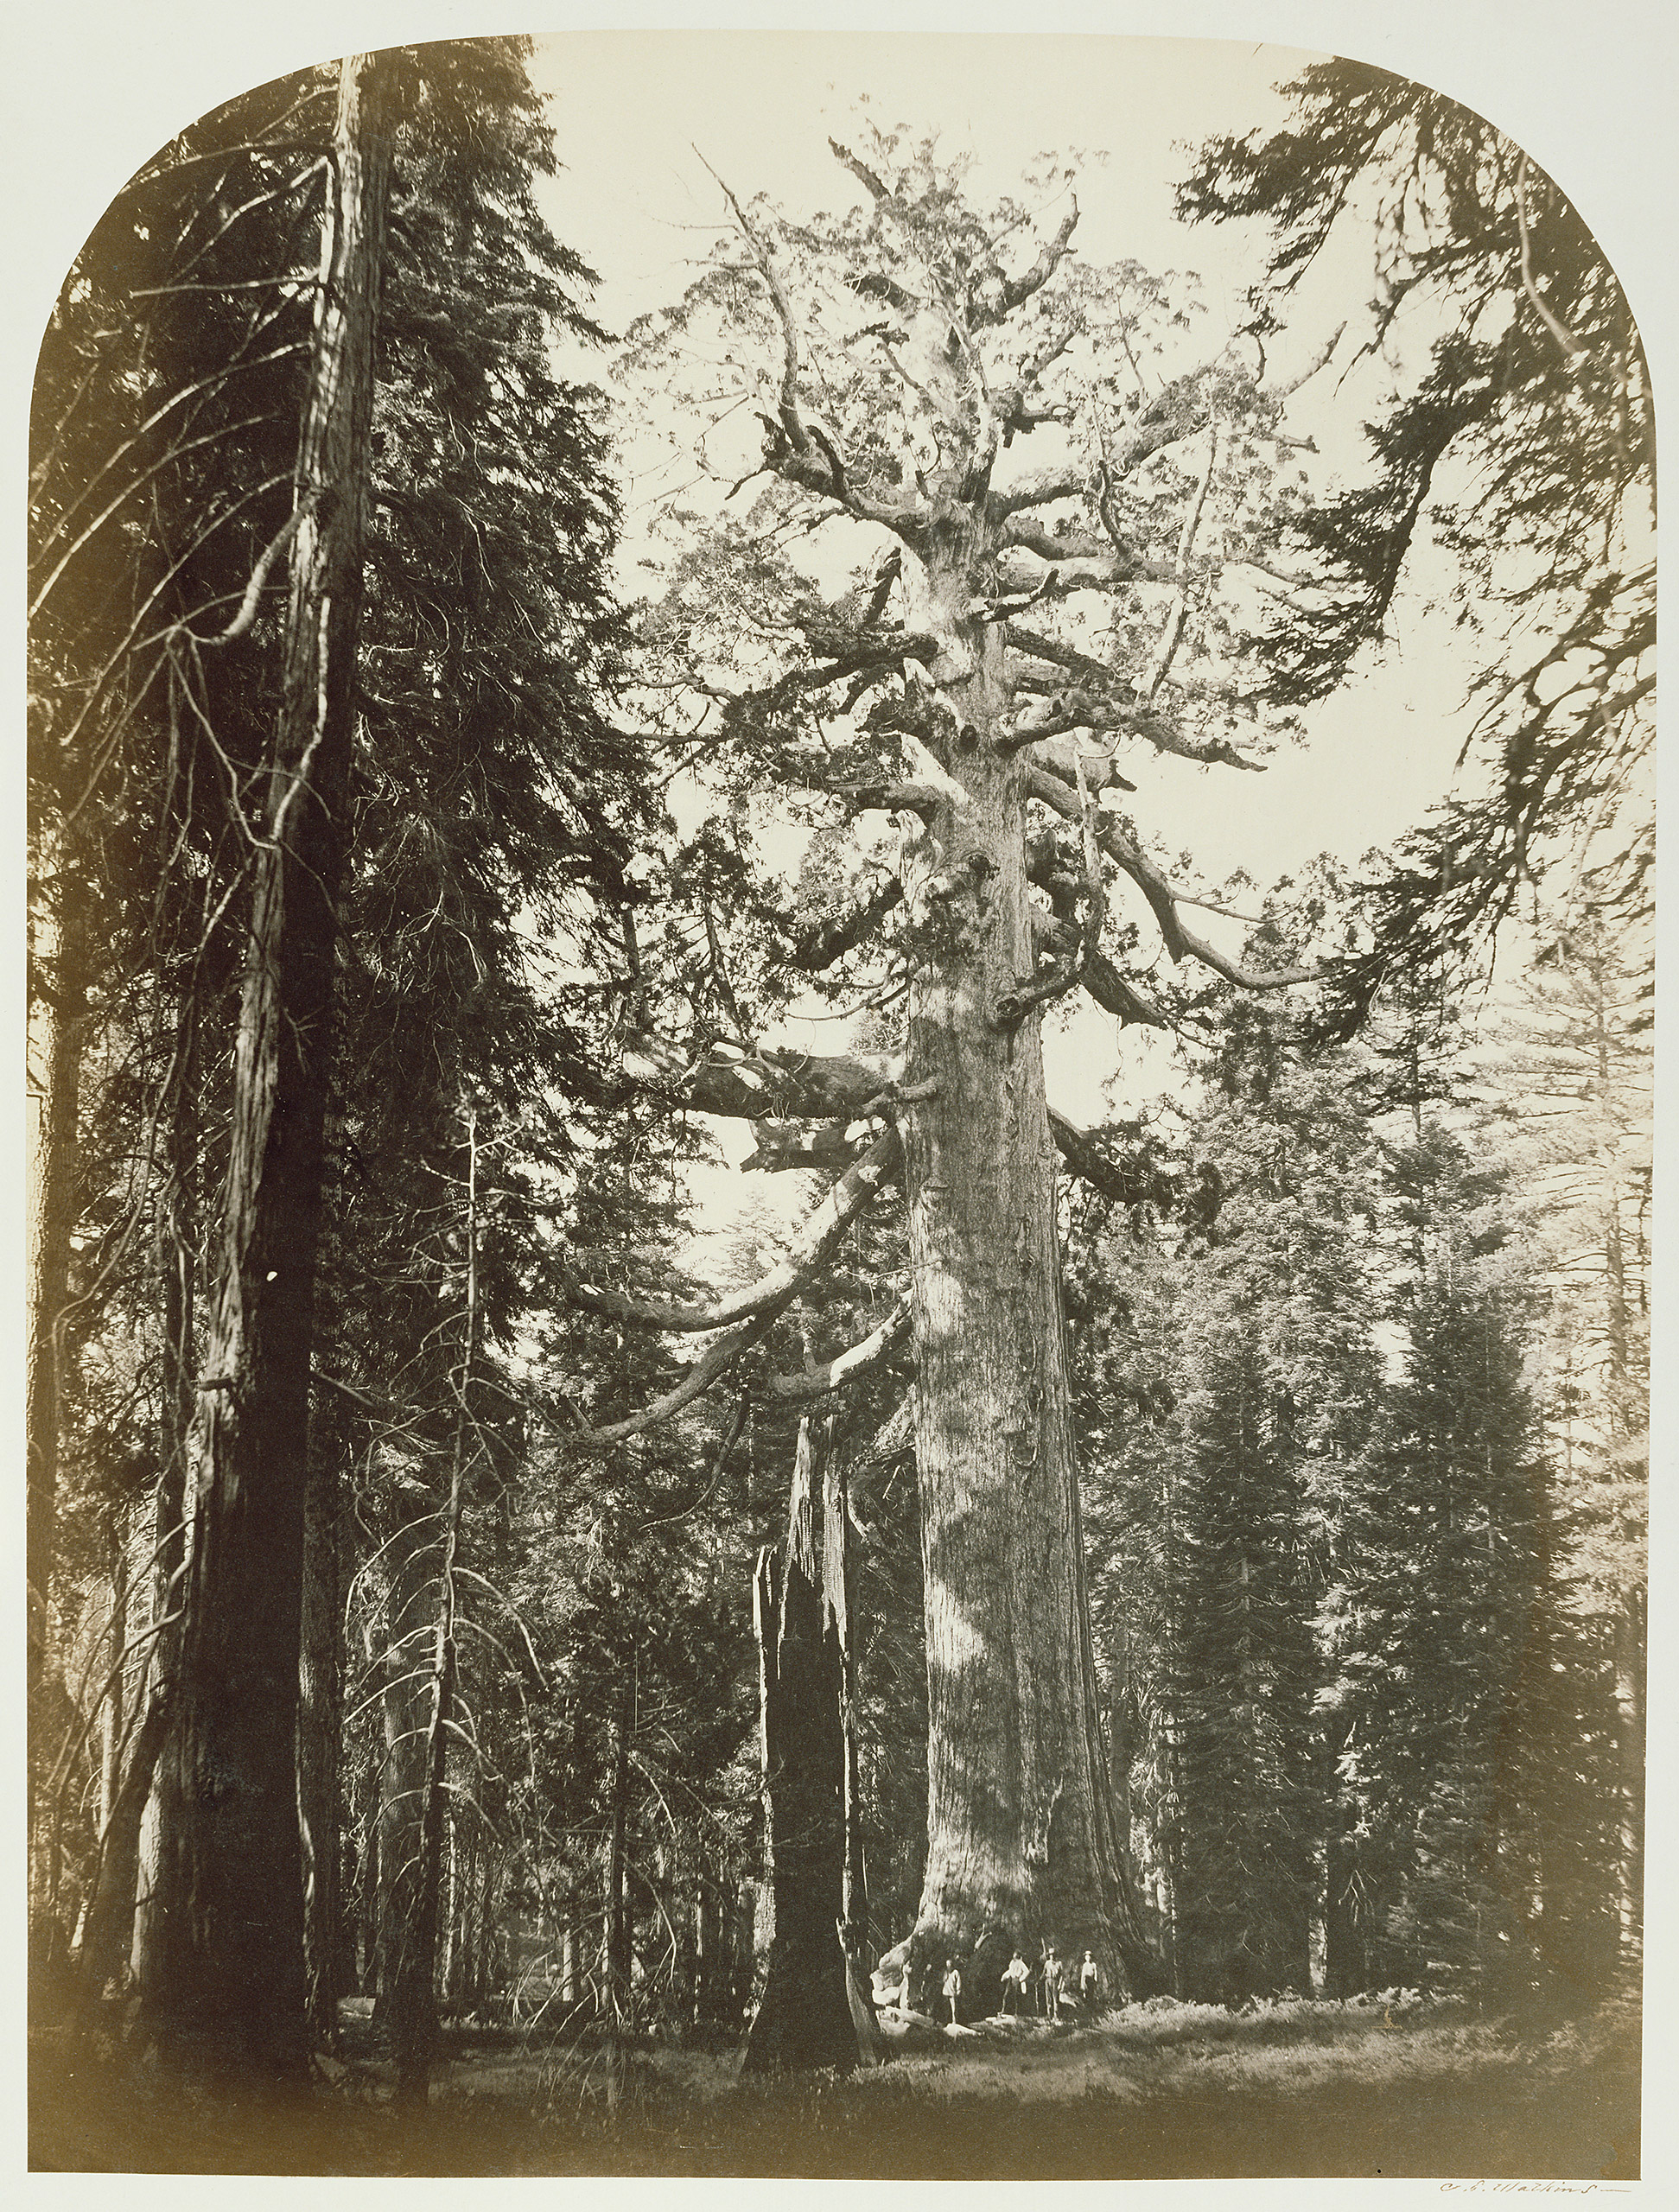 The Grizzly Giant, Mariposa Grove, Yo Semite. 1861.